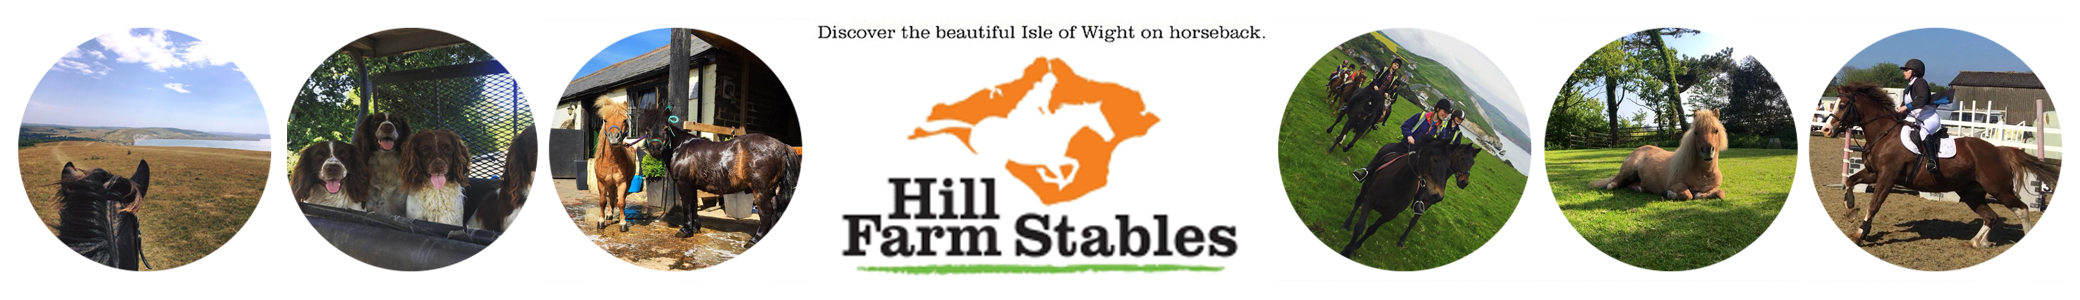 Hill Farm Stables